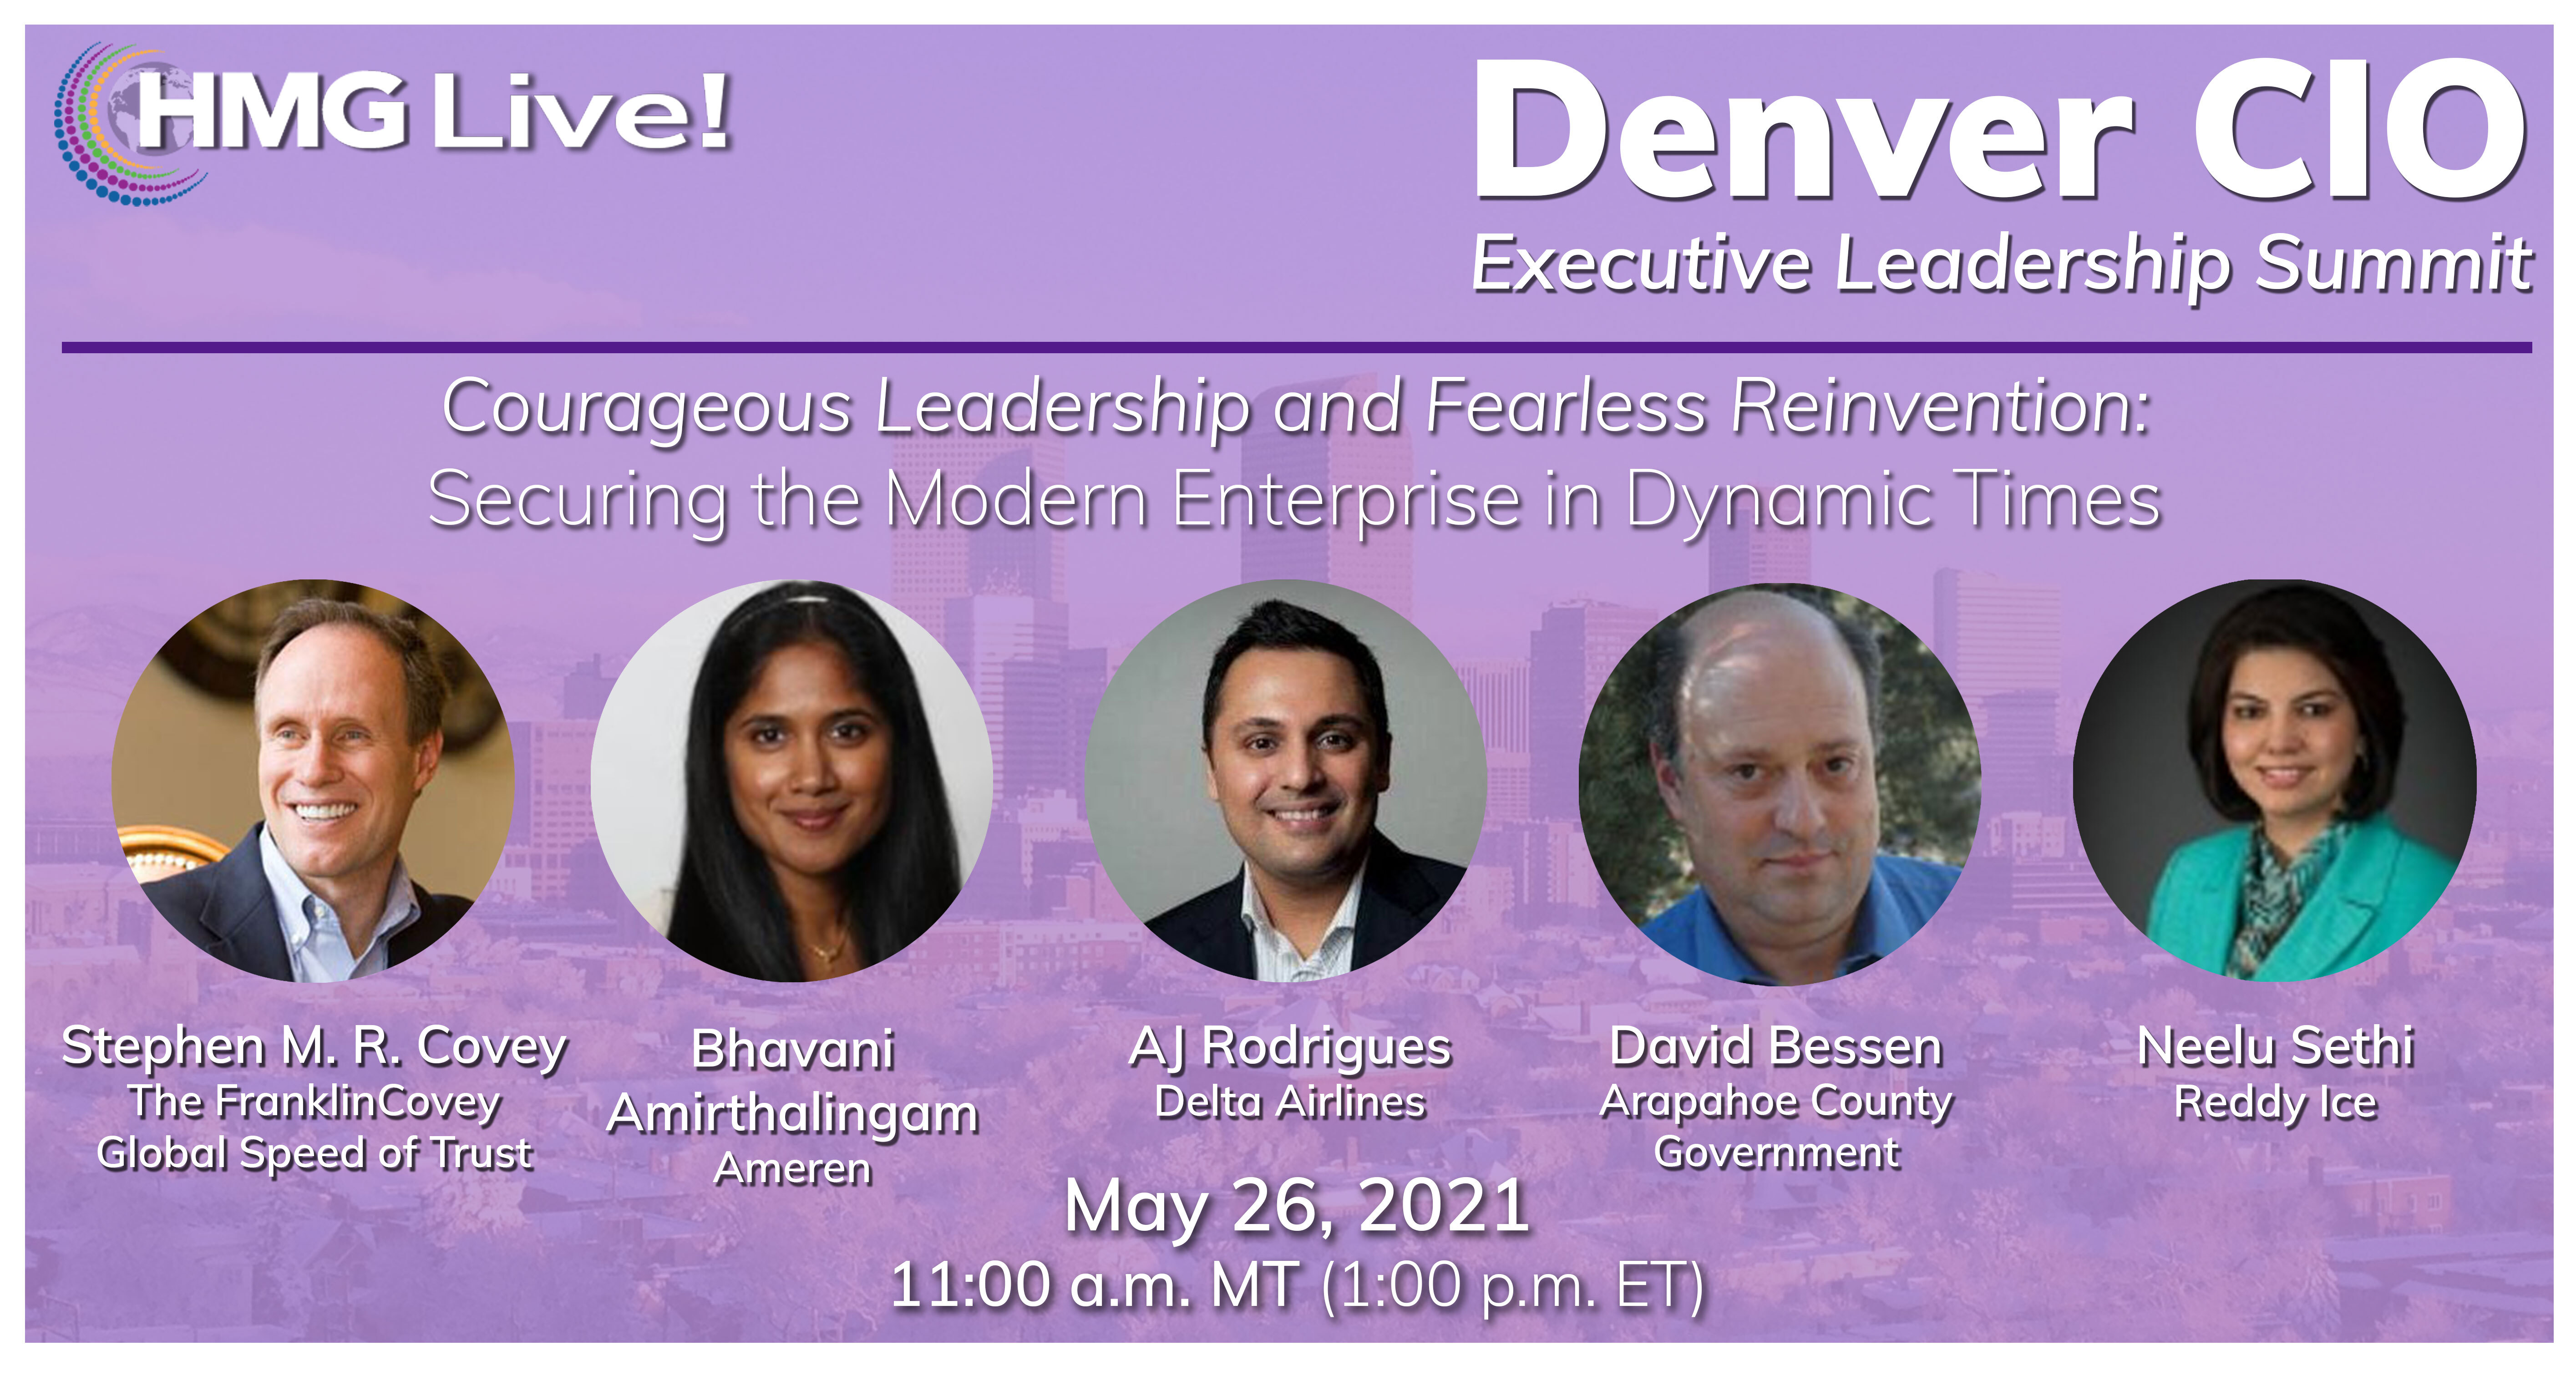 The 2021 HMG Live! Denver CIO Executive Leadership Summit